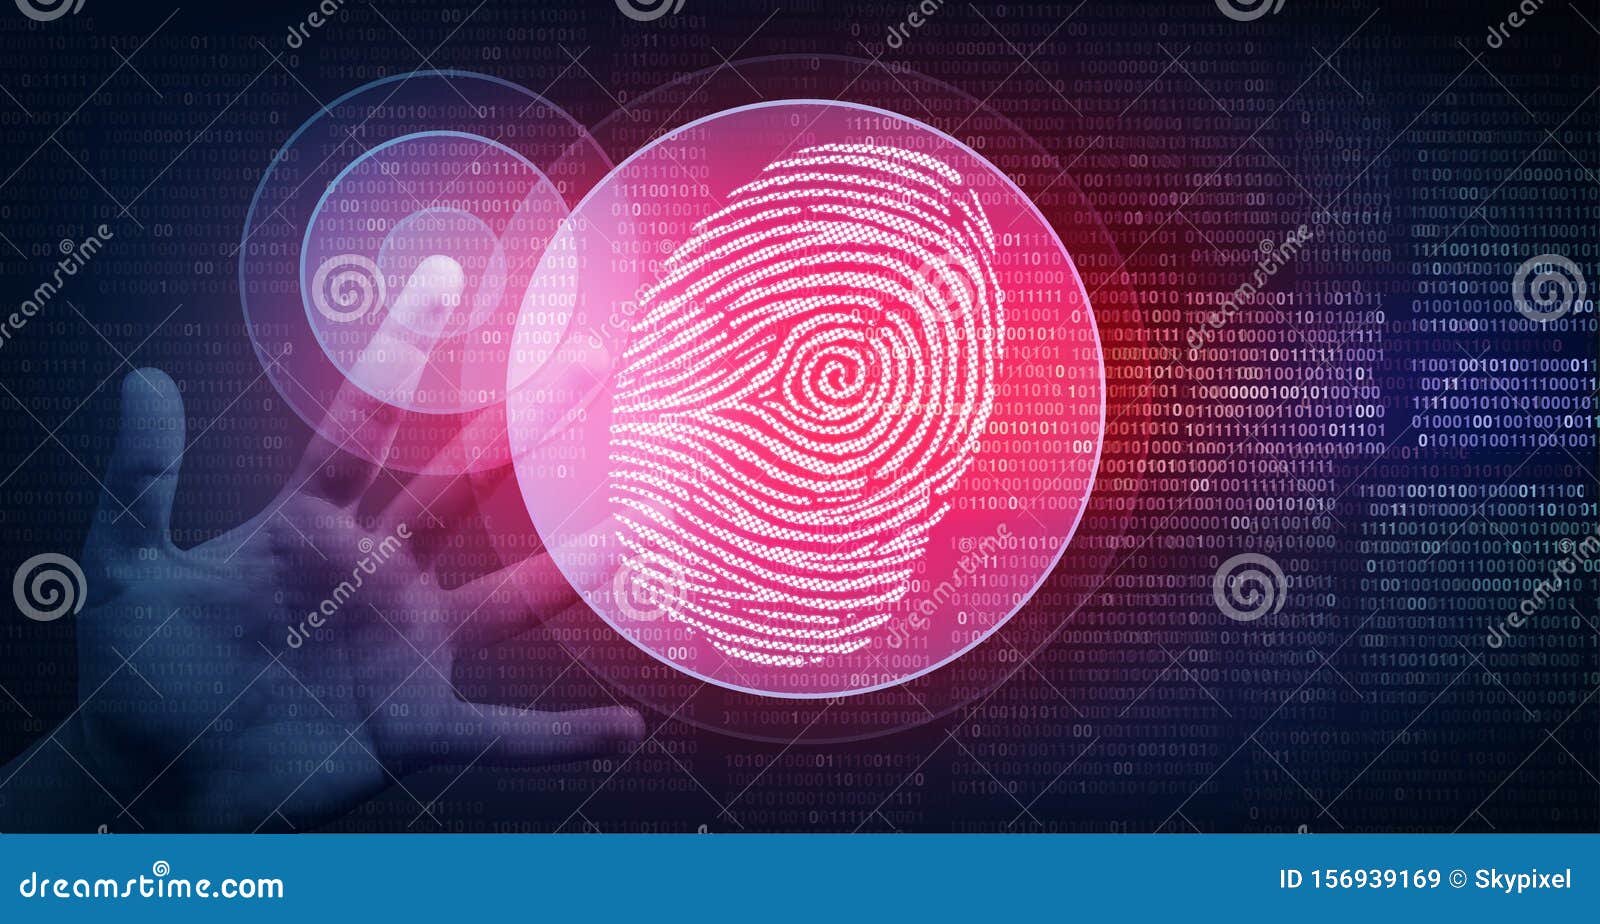 biometric security concept